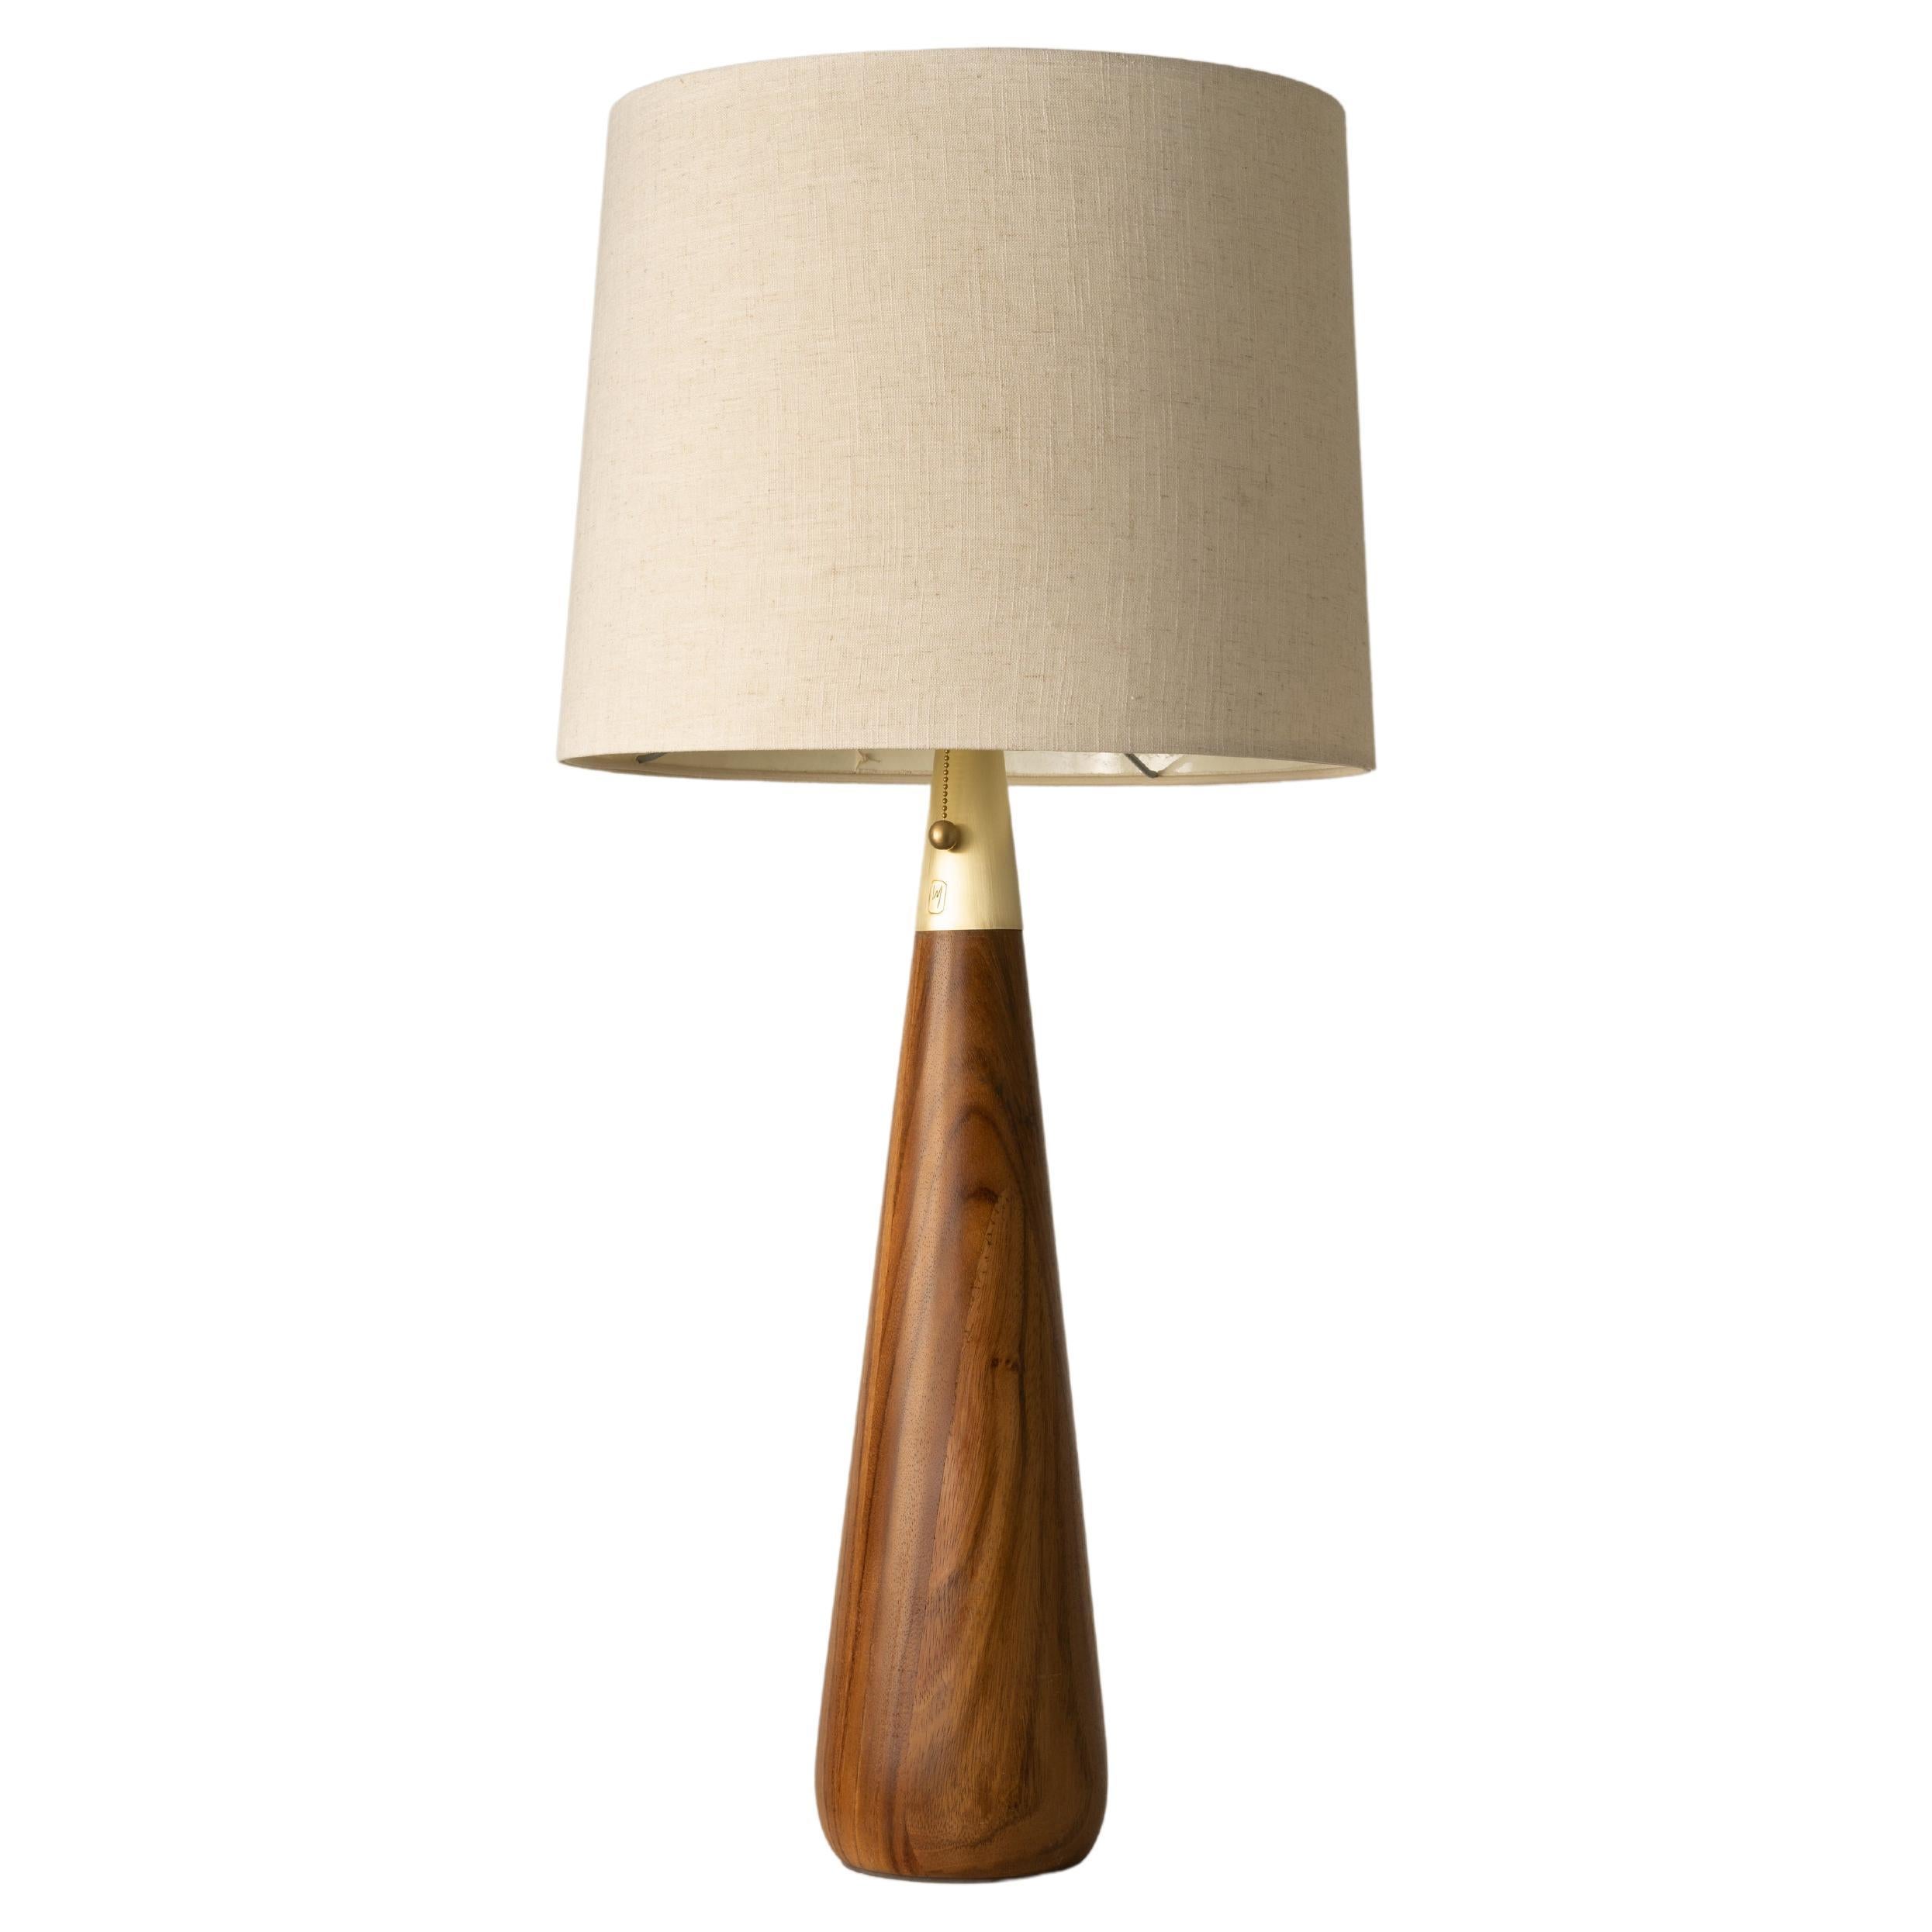 Organic Modern Table Lamp Natural Parota Wood Fiberglass Shade